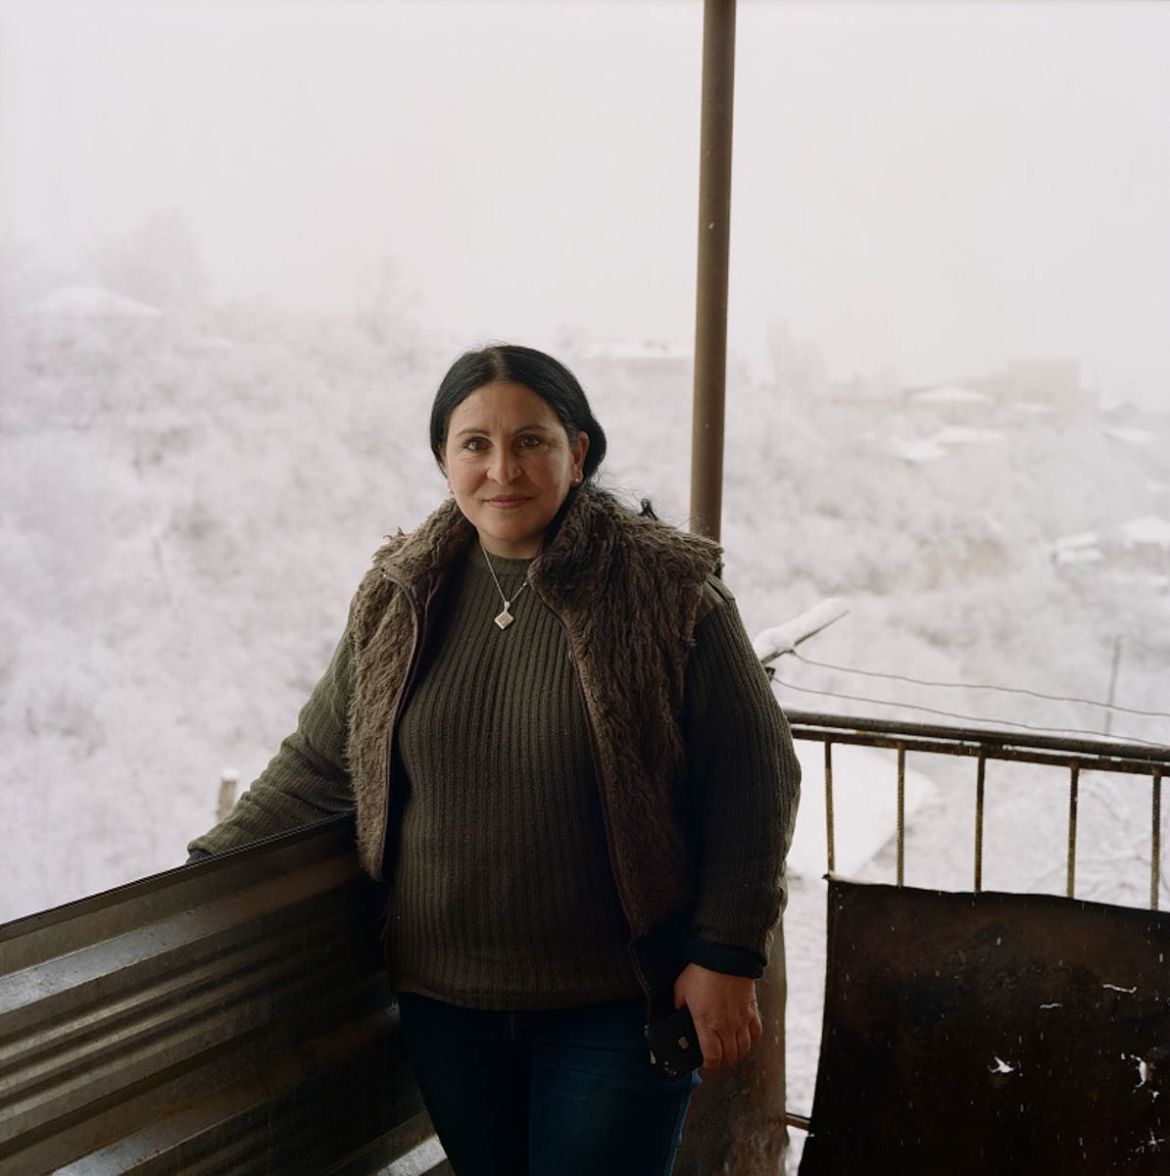 The female de-miners of Nagorno Karabakh